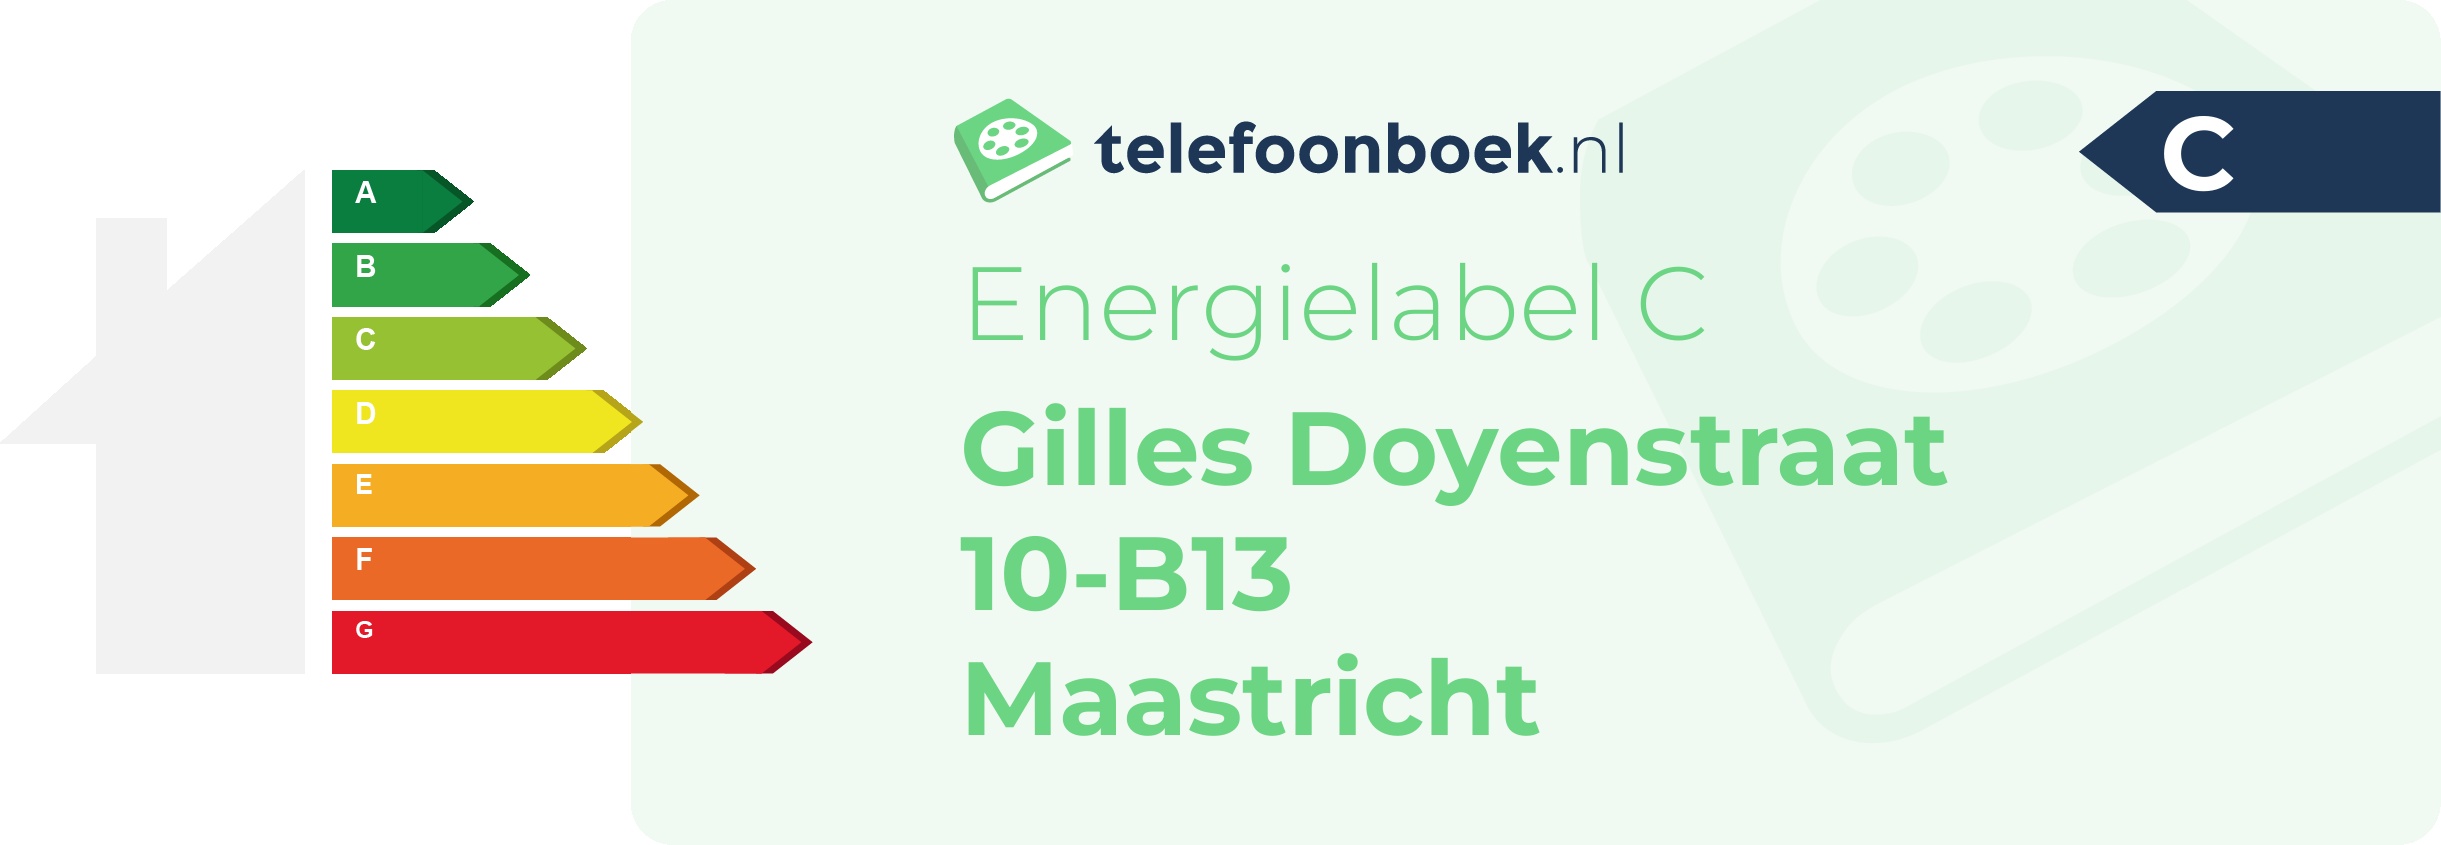 Energielabel Gilles Doyenstraat 10-B13 Maastricht